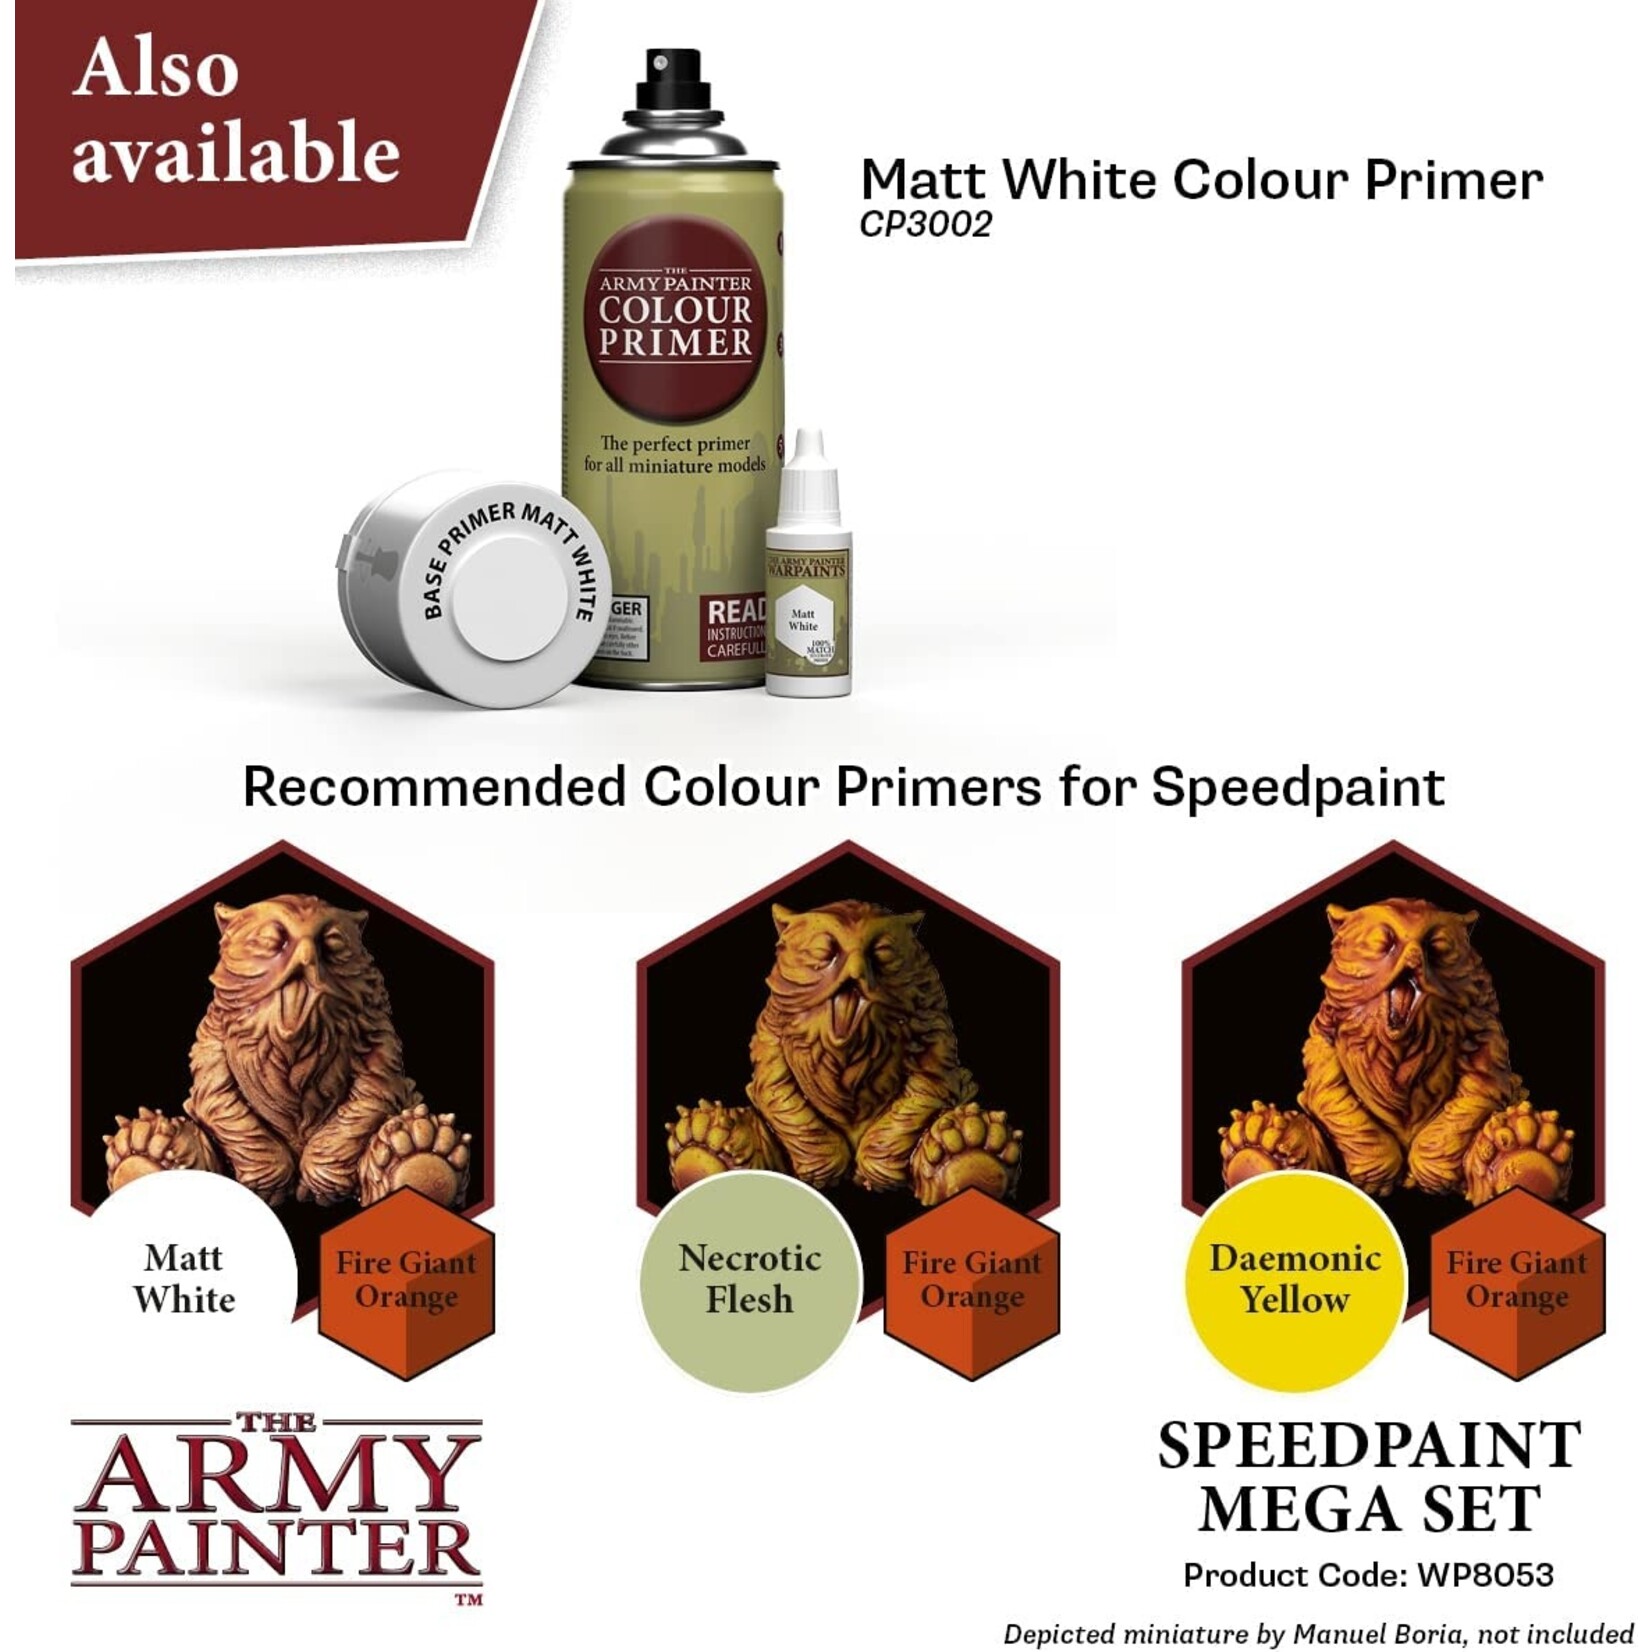 the army painter The Army Painter: Speedpaint Mega Set